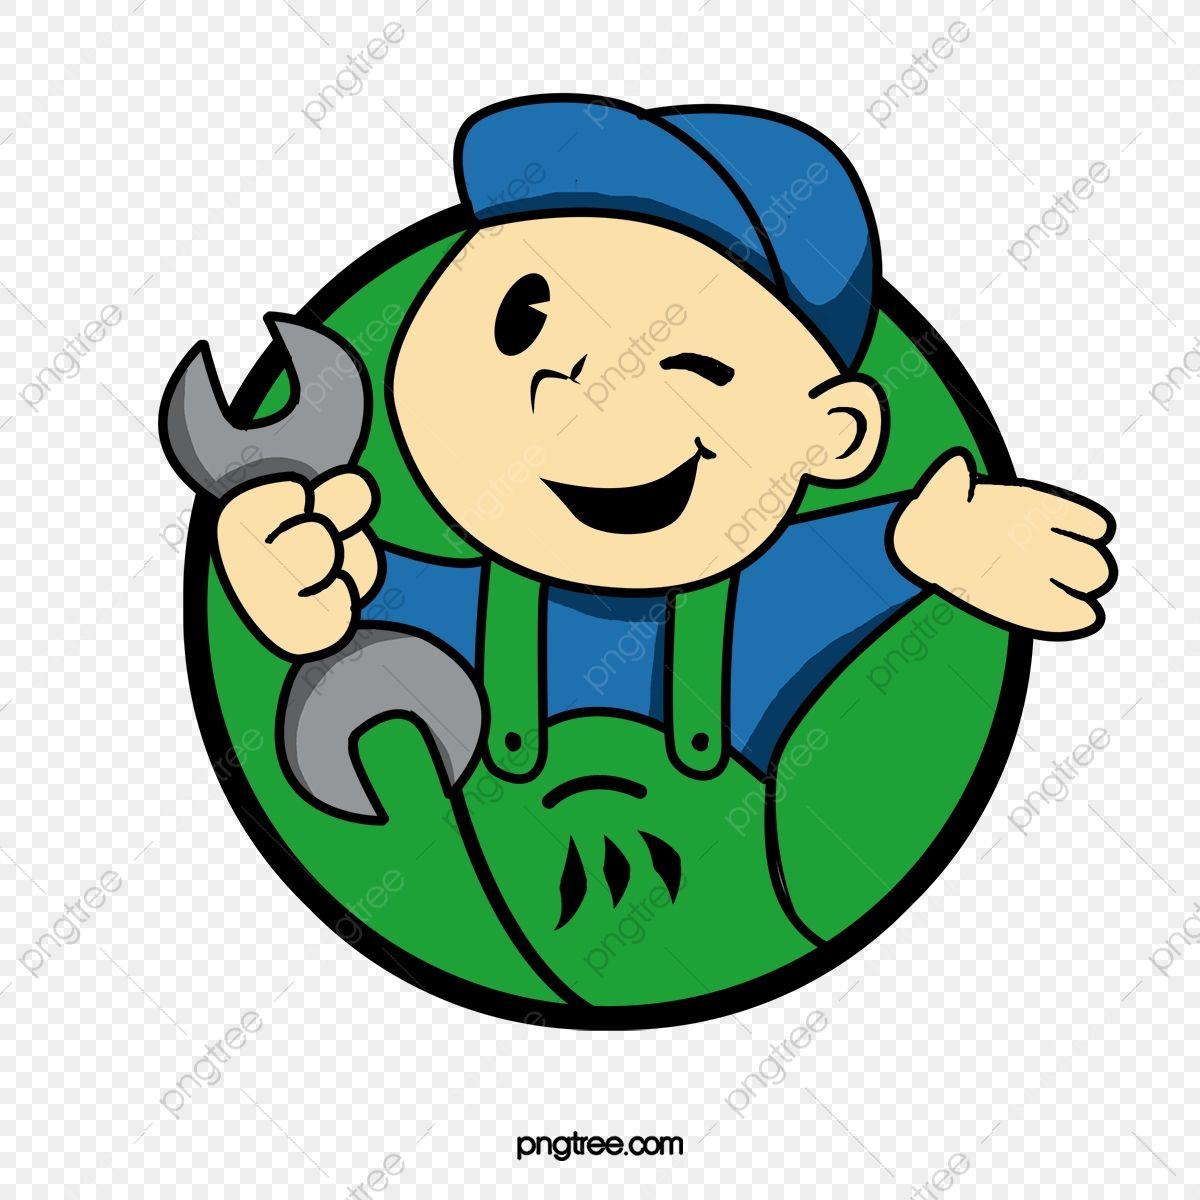 Maintenance Logo - Maintenance Logo, Logo Clipart, Car Repair, Logo PNG Transparent ...